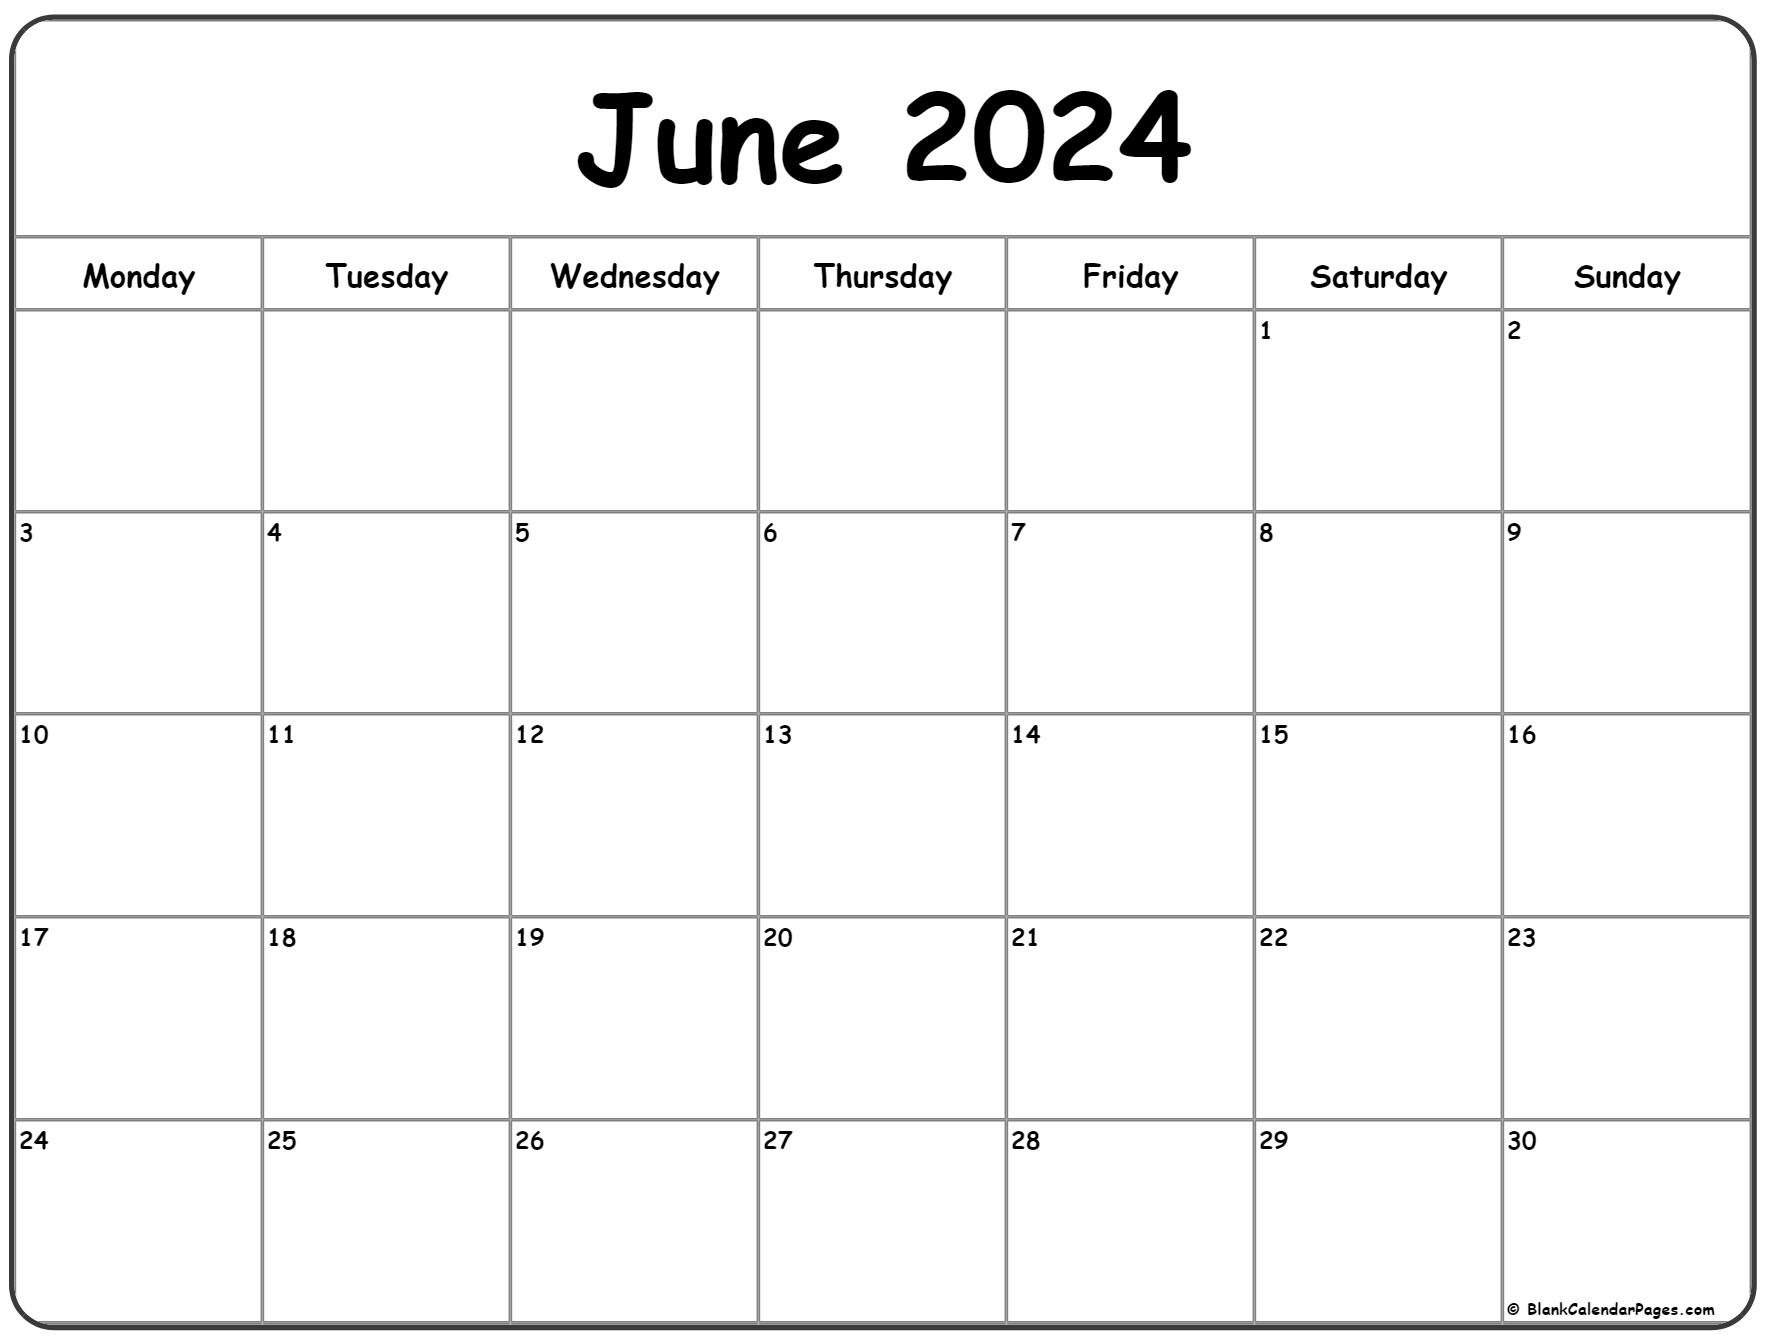 June 2024 Monday Calendar | Monday To Sunday inside June 2024 Calender